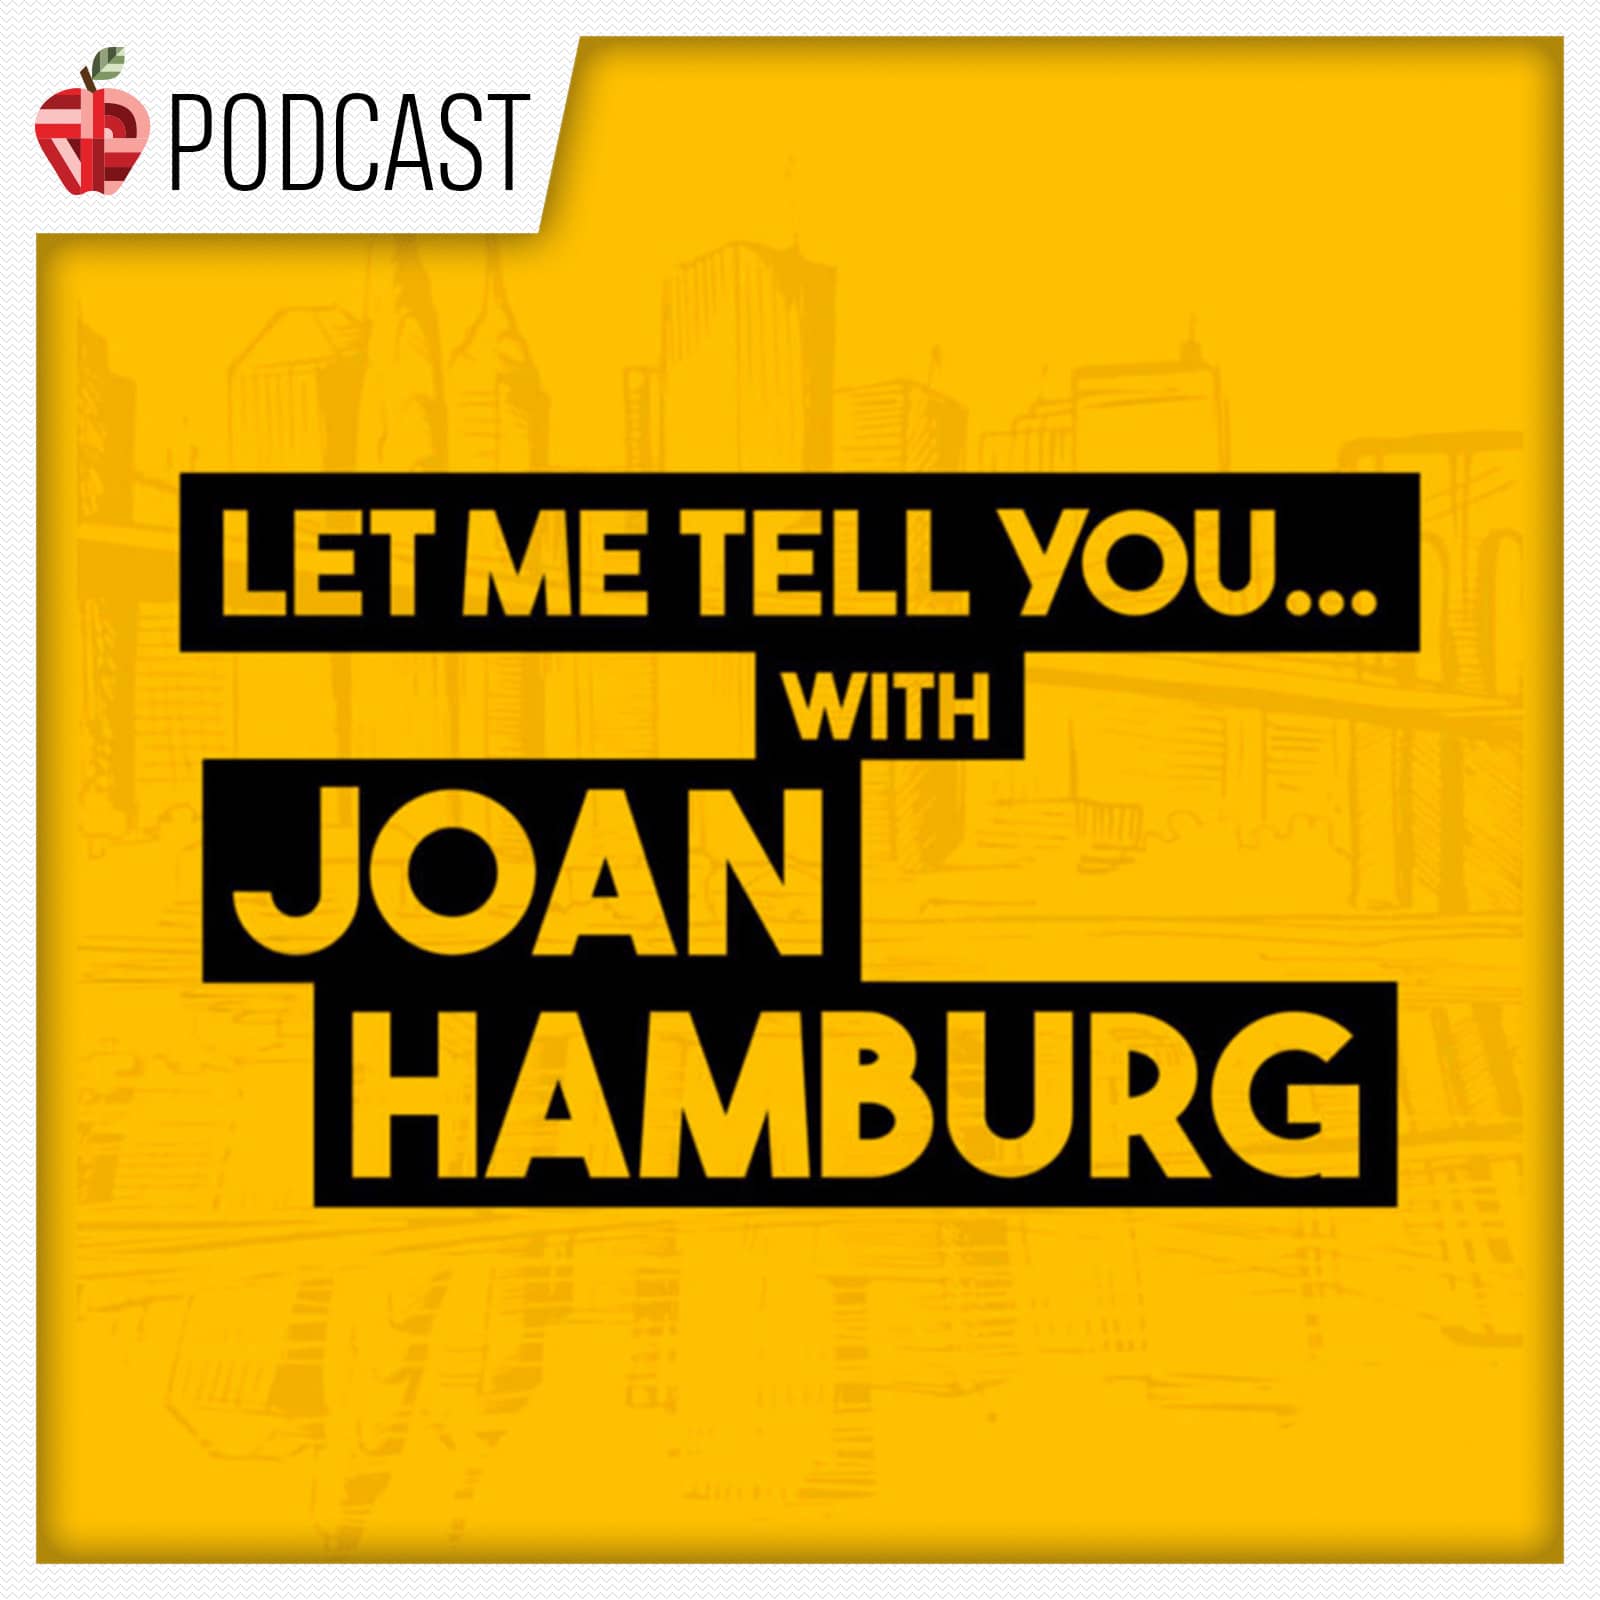 joan-hamburg-let-me-tell-you-podcast-podcast-logo-20